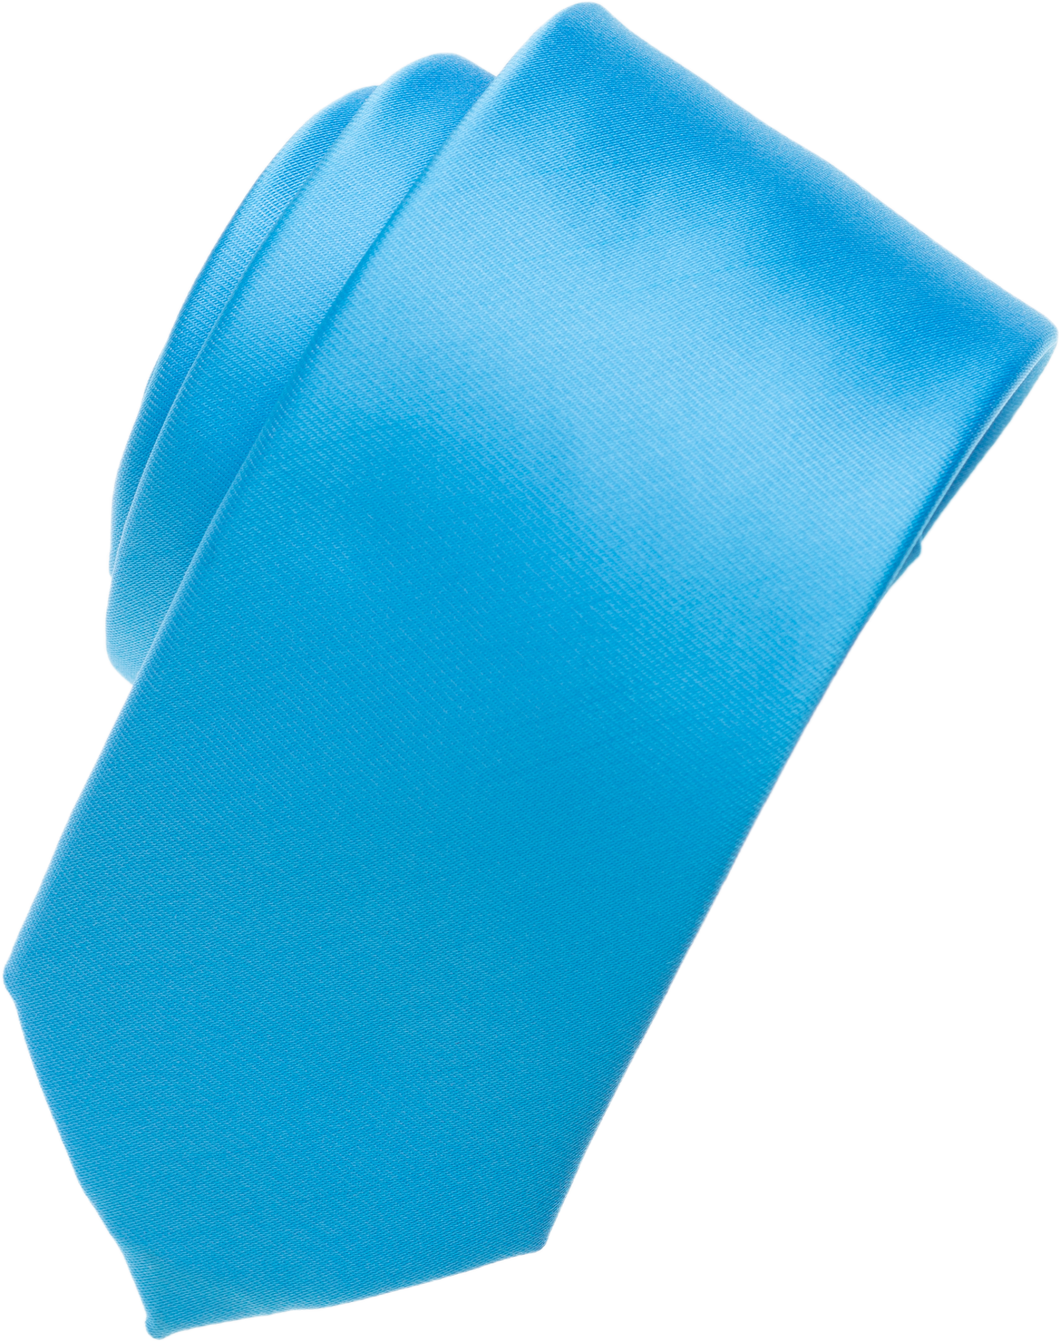 Cobalt Blue Skinny Necktie